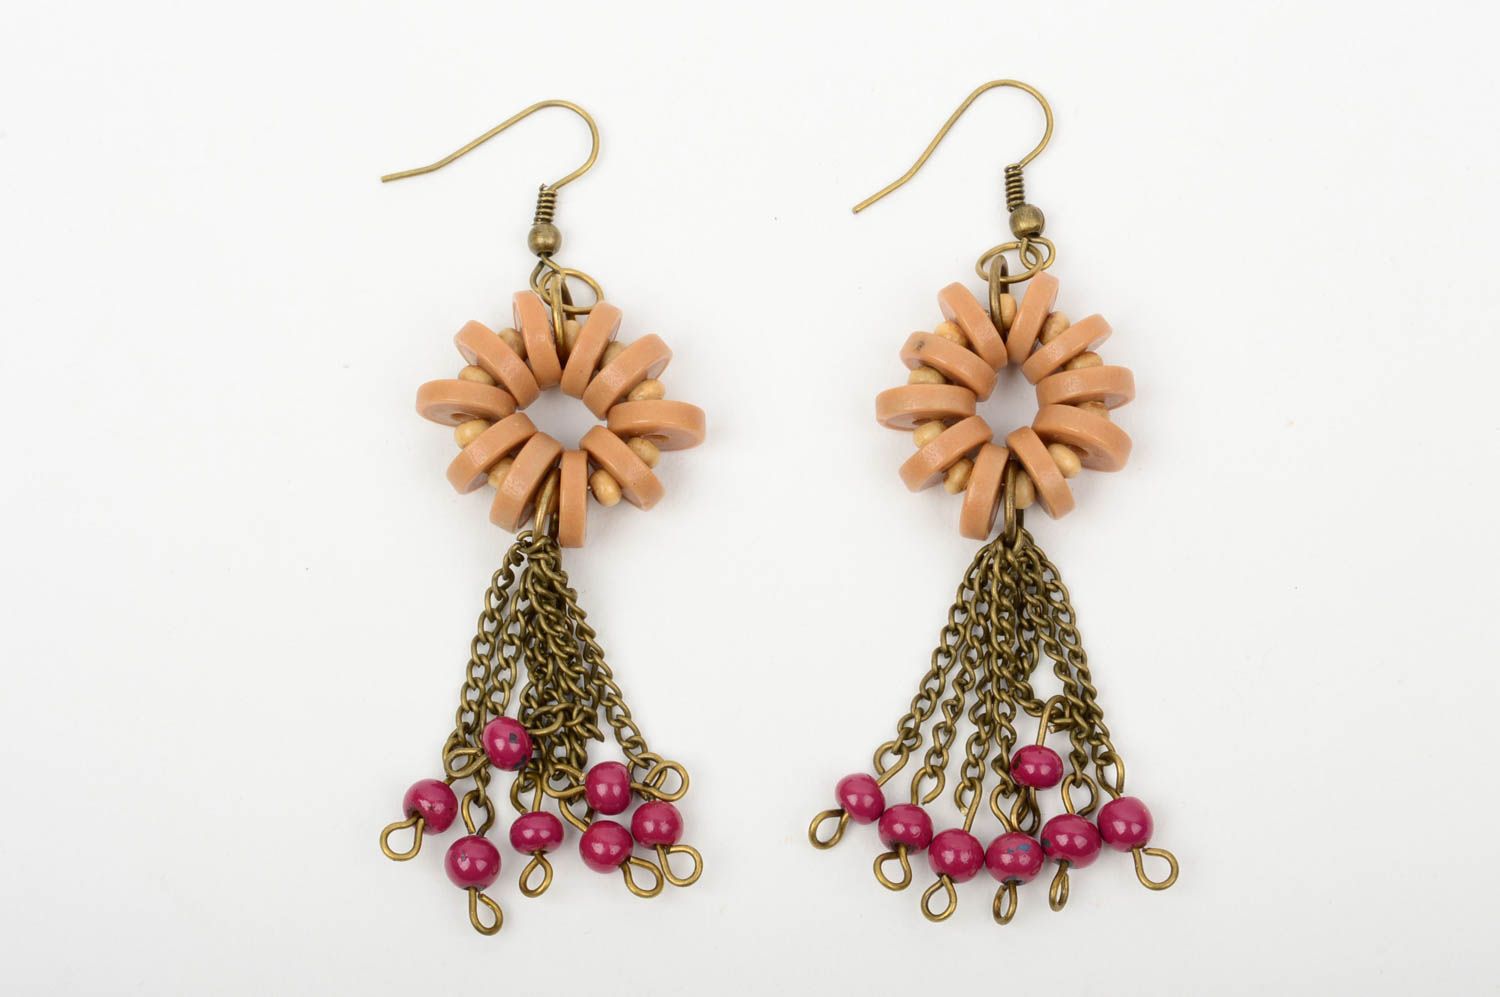 Handmade earrings designer jewelry unusual earrings for girls gift ideas photo 3